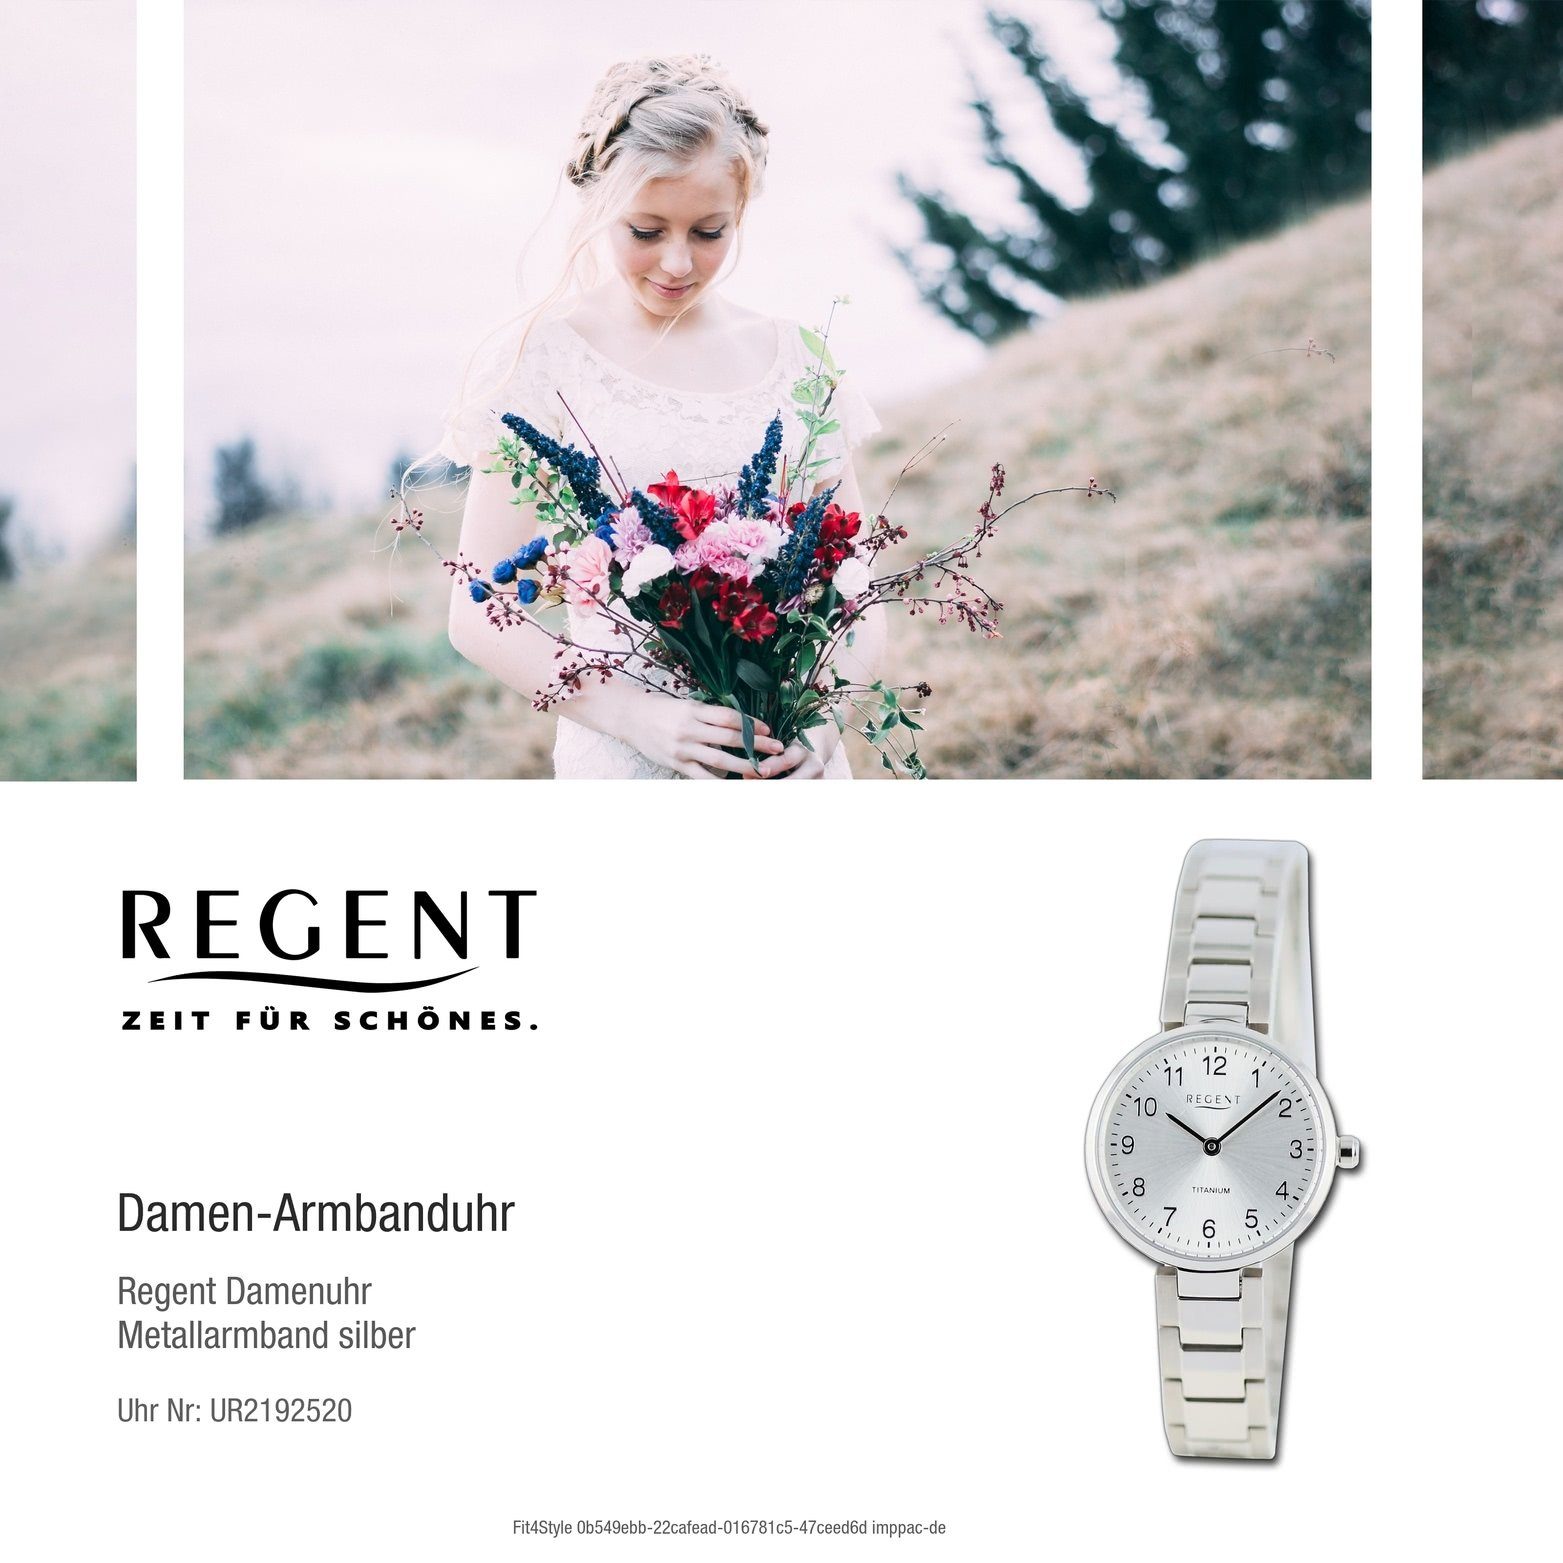 Regent Quarzuhr Regent Armbanduhr Metallarmband Gehäuse, (ca. rundes Damen Analog, 26mm) Damenuhr silber, groß extra